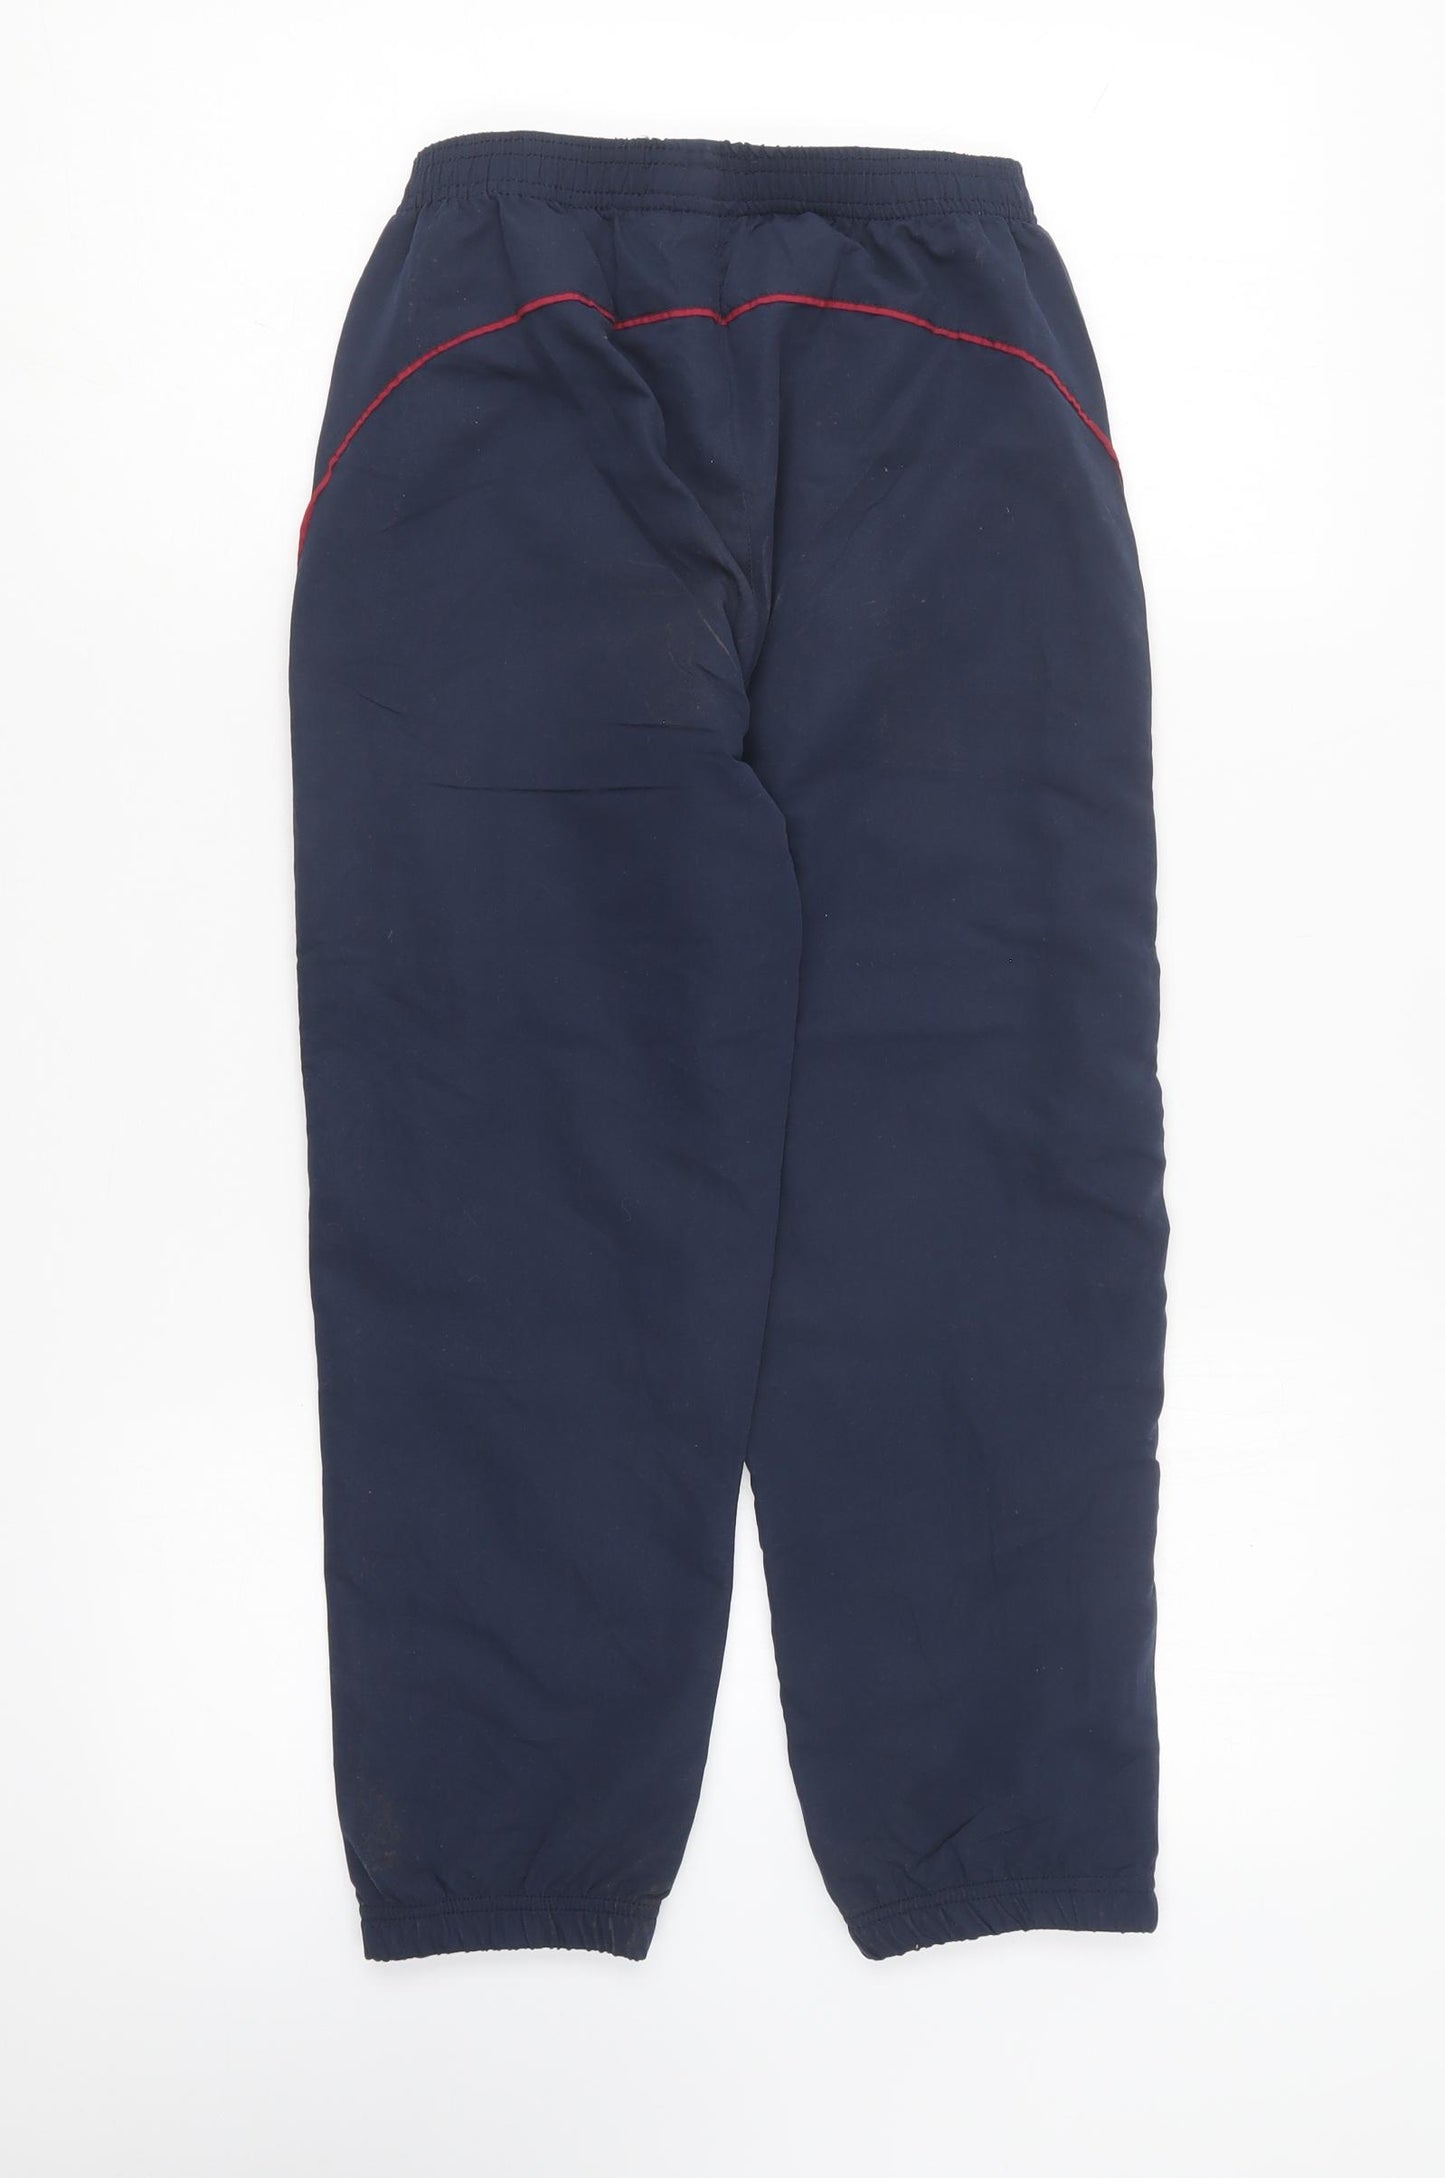 FC Barcelona Boys Blue Polyester Jogger Trousers Size 8-9 Years Regular - Barcelona FC